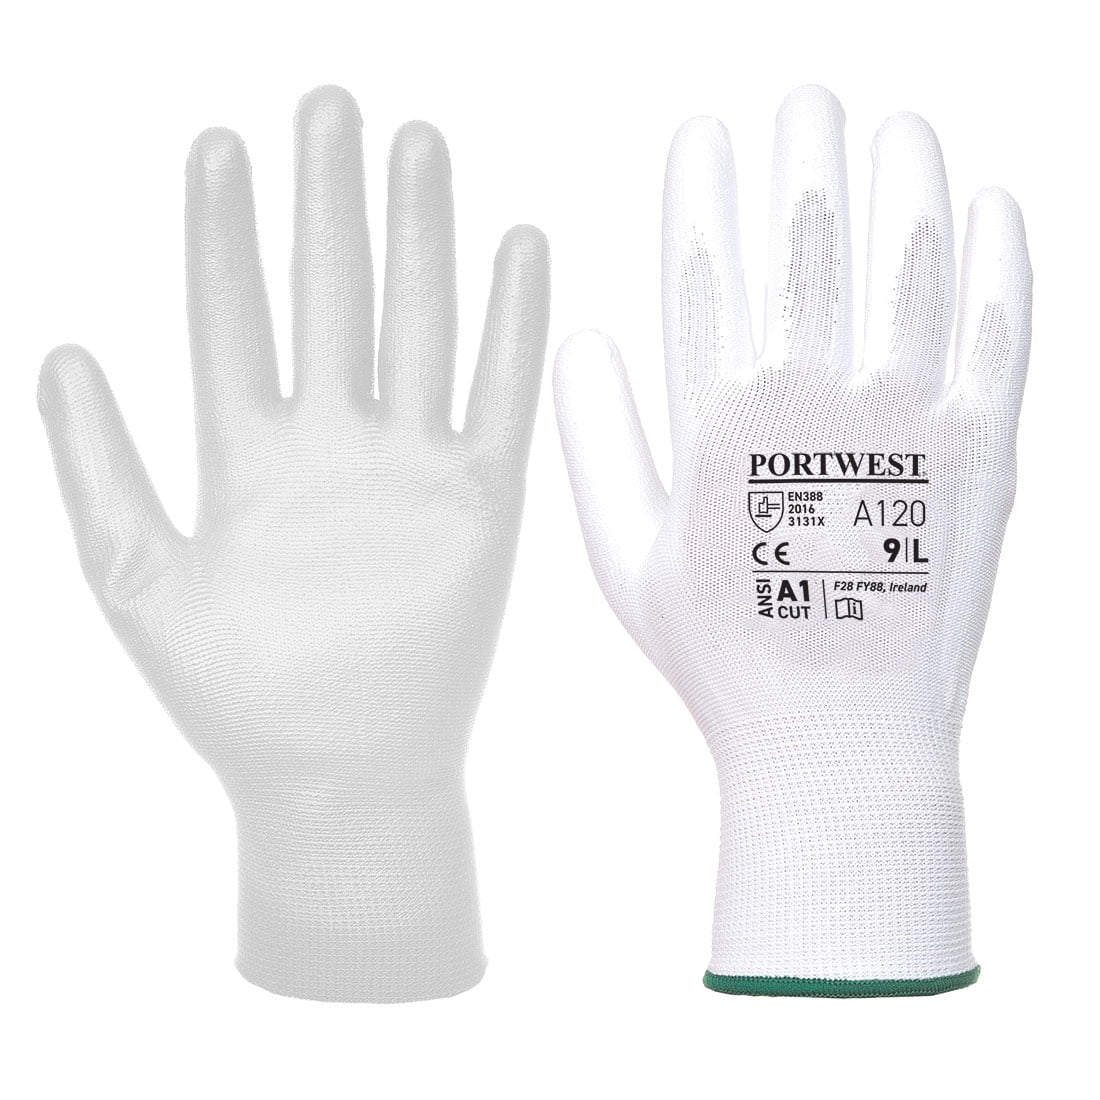 Work Gloves PU Coated General Purpose Portwest A120 ORANGE Size XS 2XL 